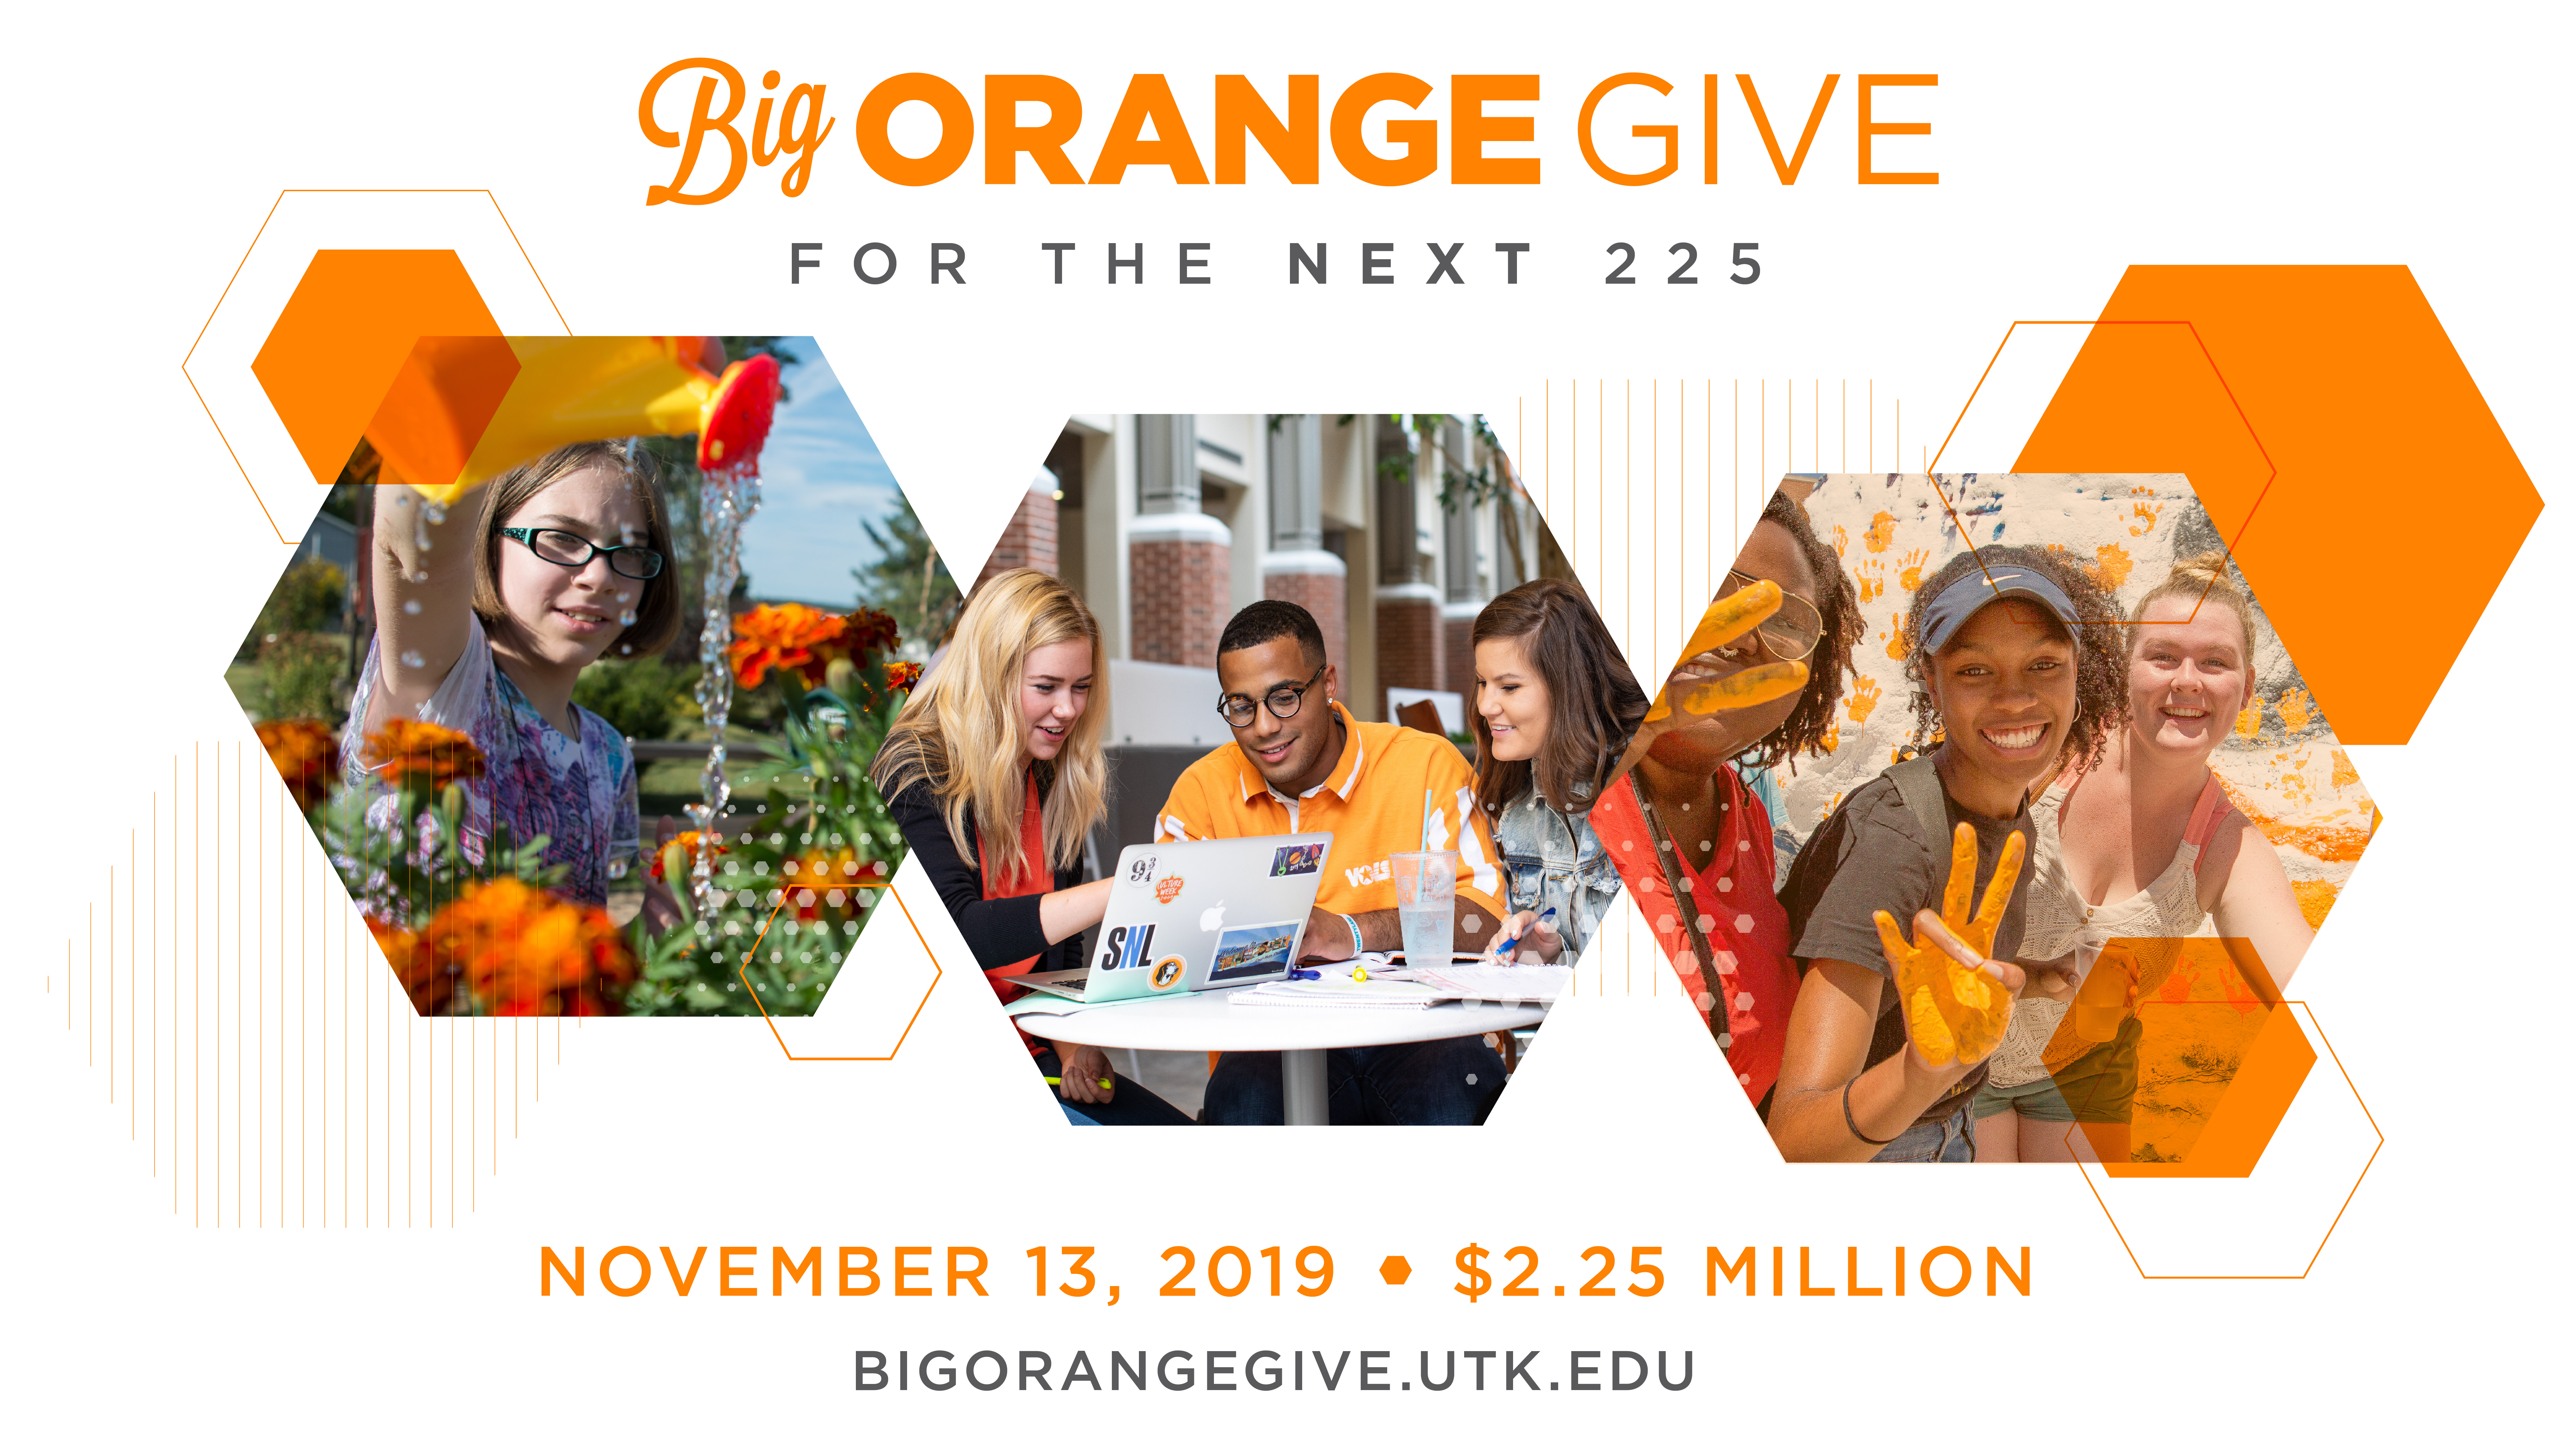 Big Orange Give 2019 date and website